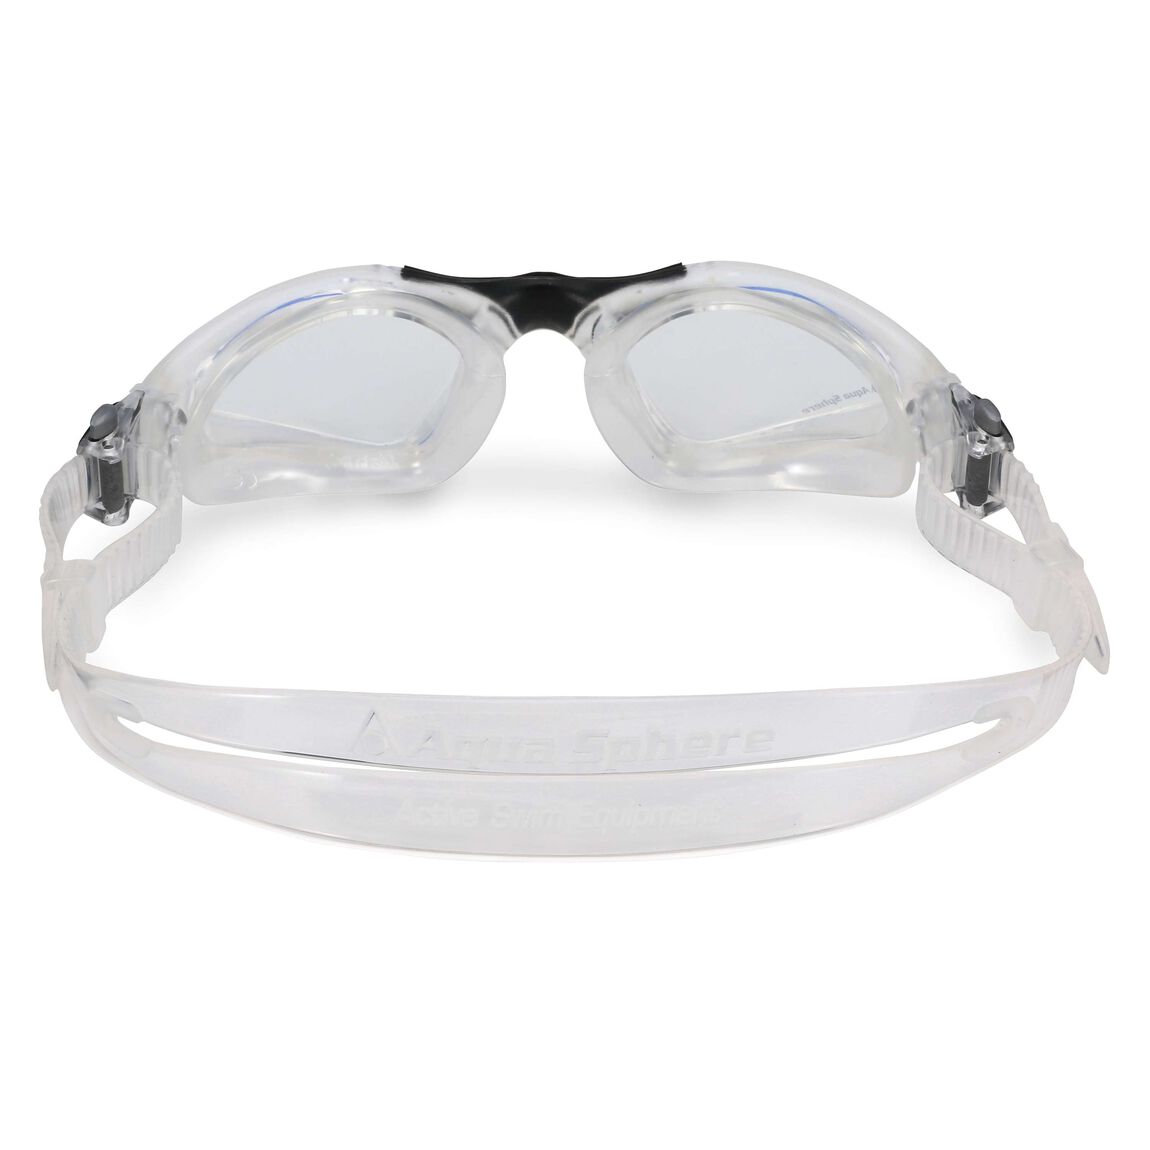 Aquasphere Kayenne Swim Goggles - Transparent/Black